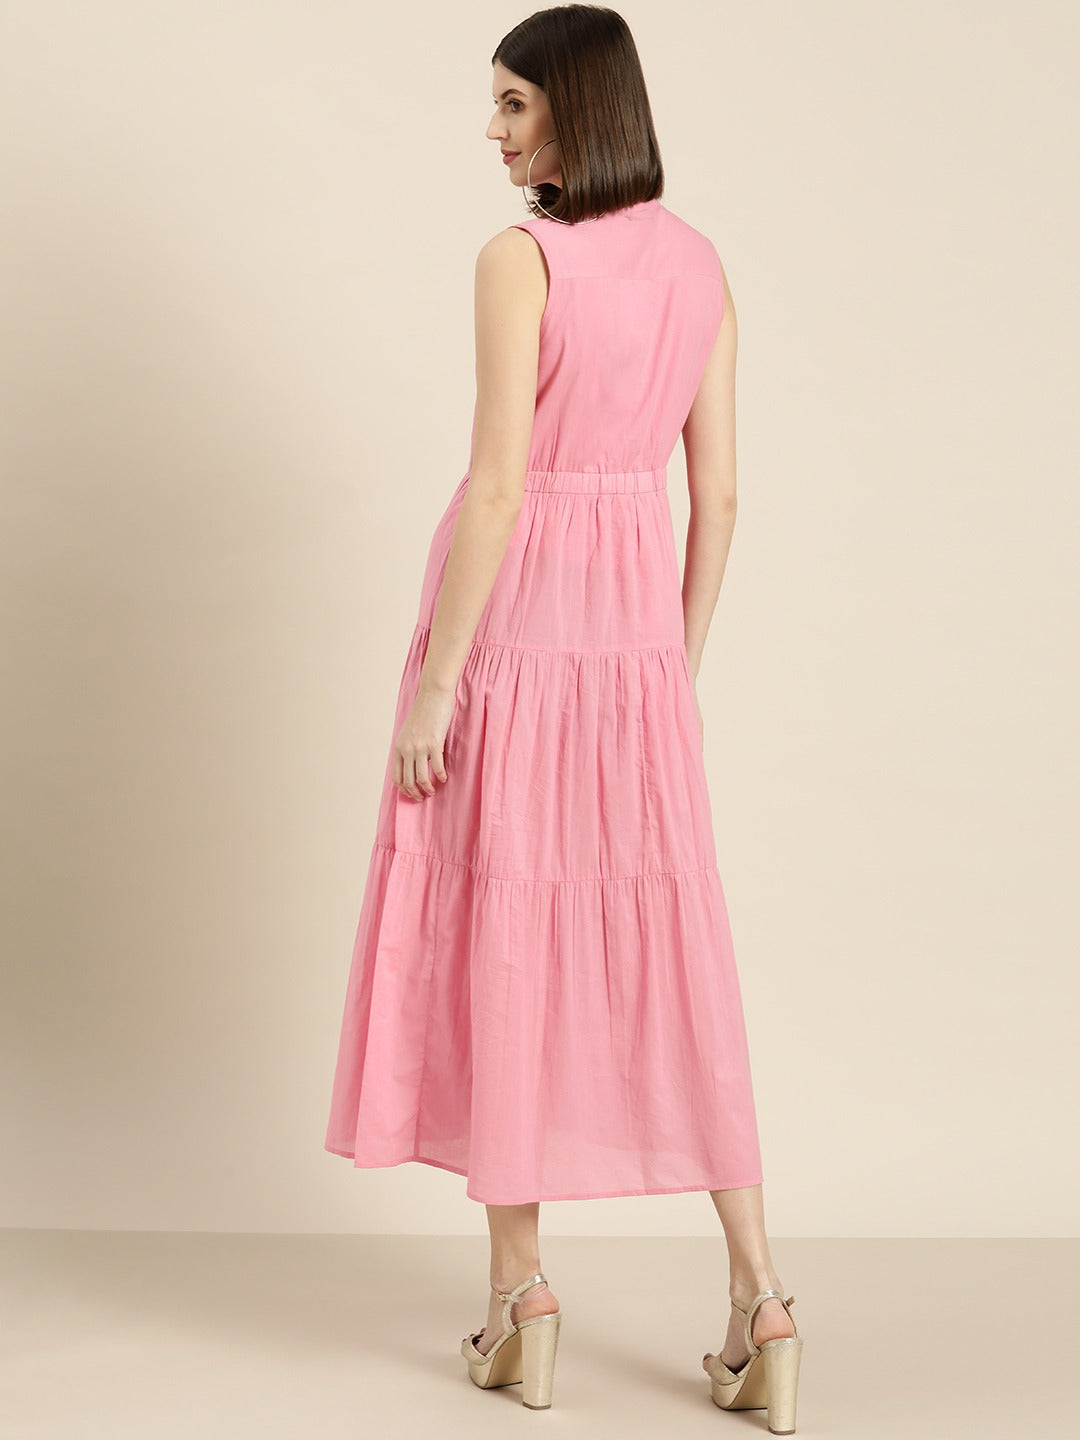 Pink Sleeveless Tiered Dress